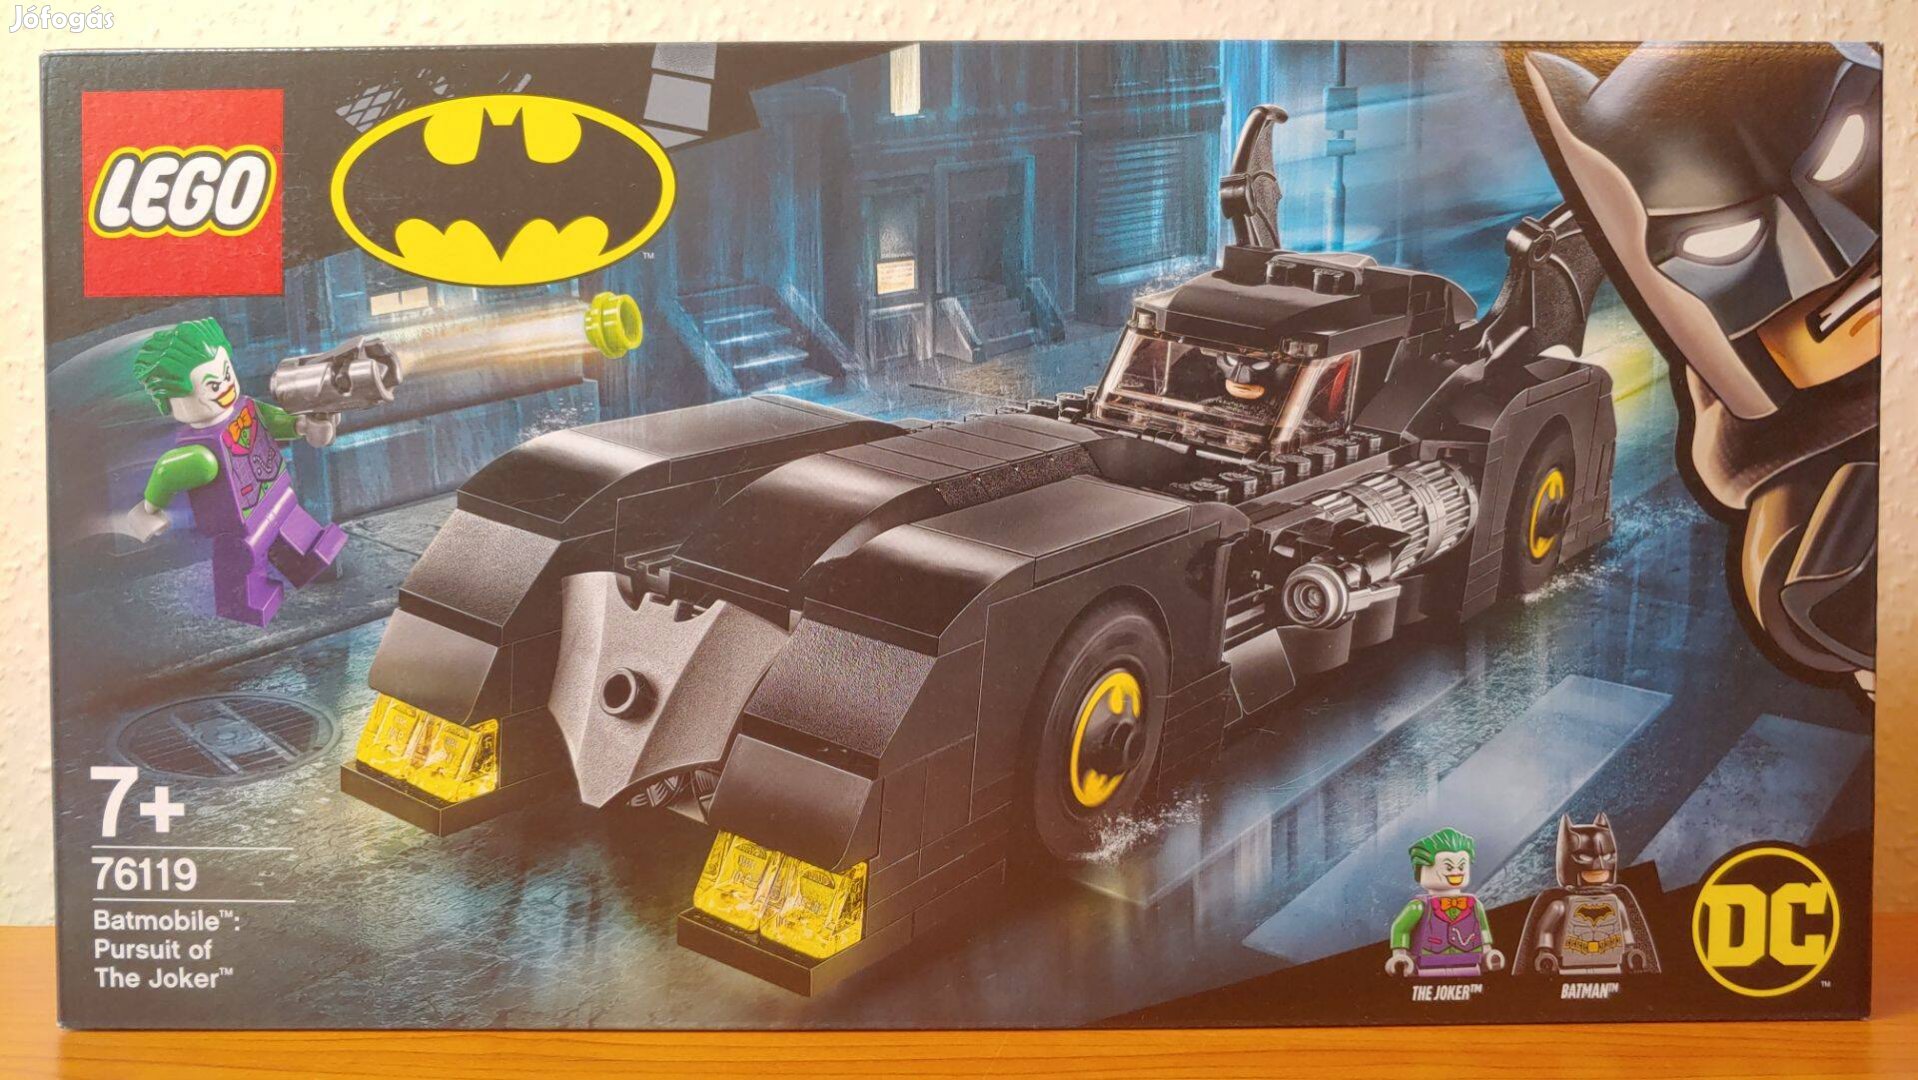 Lego 76119 Batmobile: Pursuit of The Joker